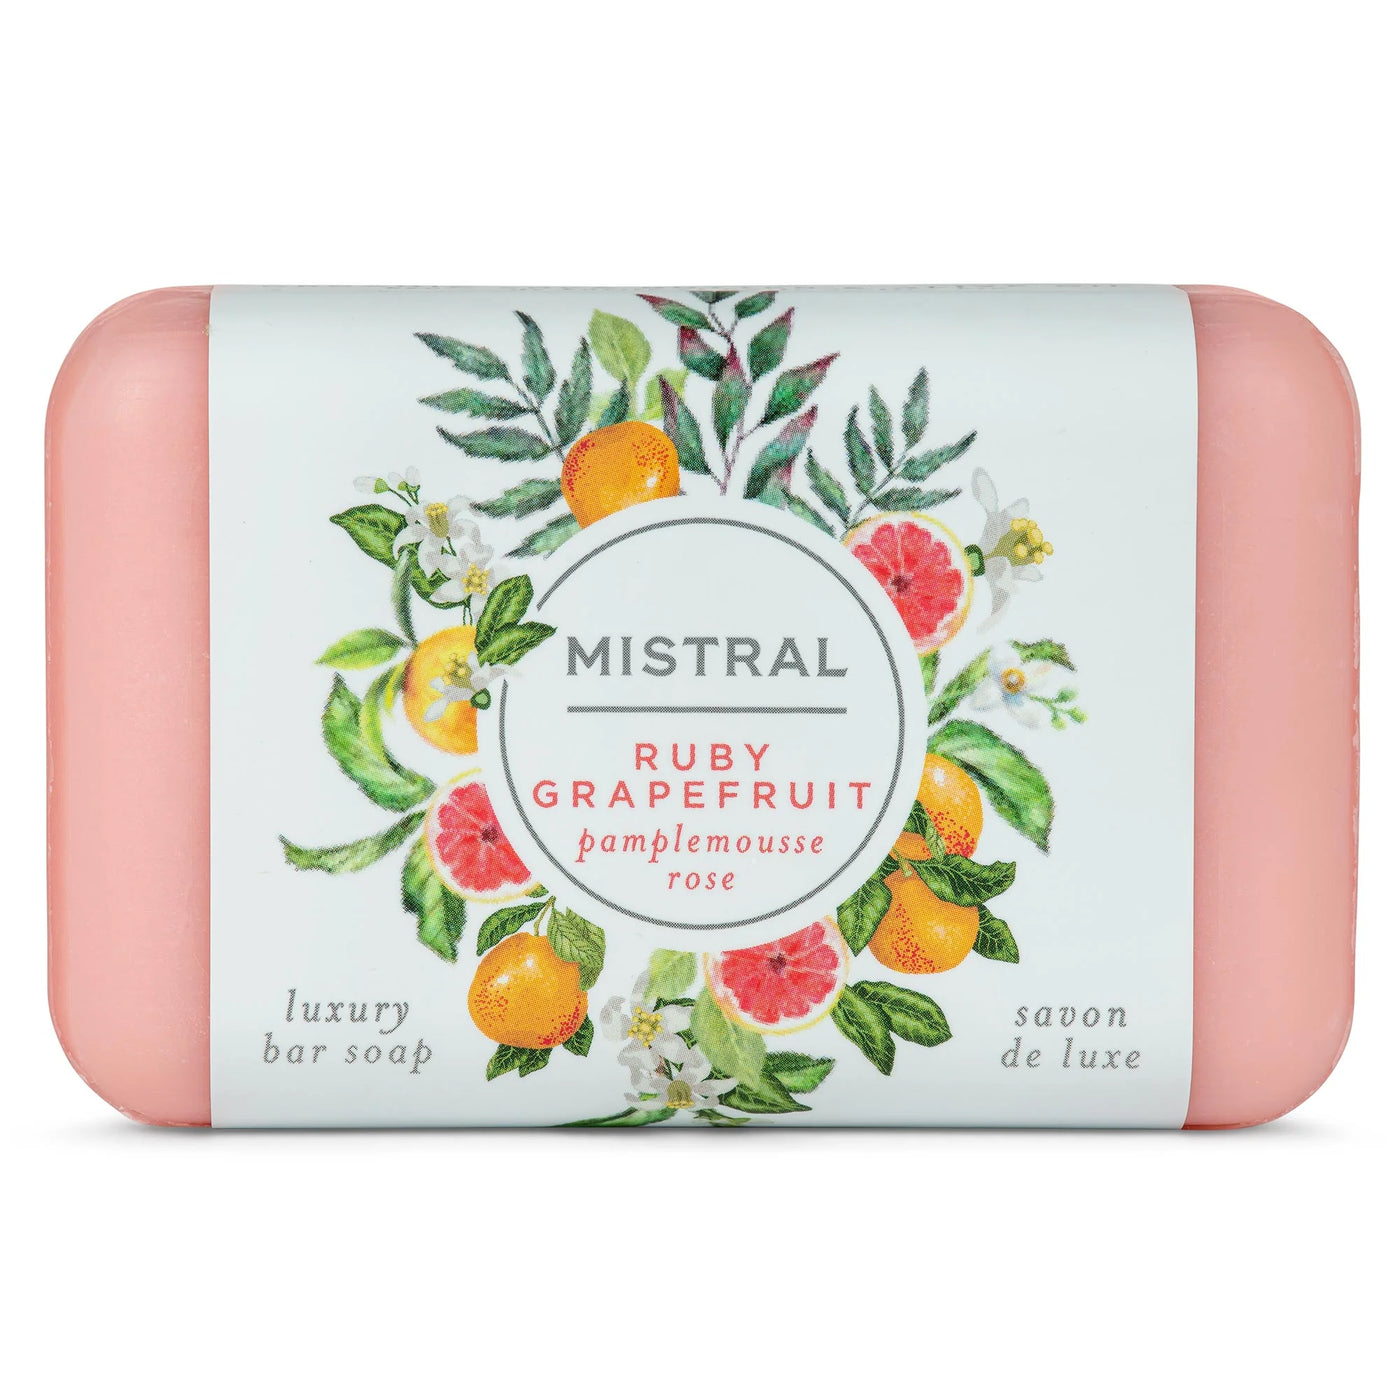 Mistral RUBY GRAPEFRUIT CLASSIC BAR SOAP - Women's